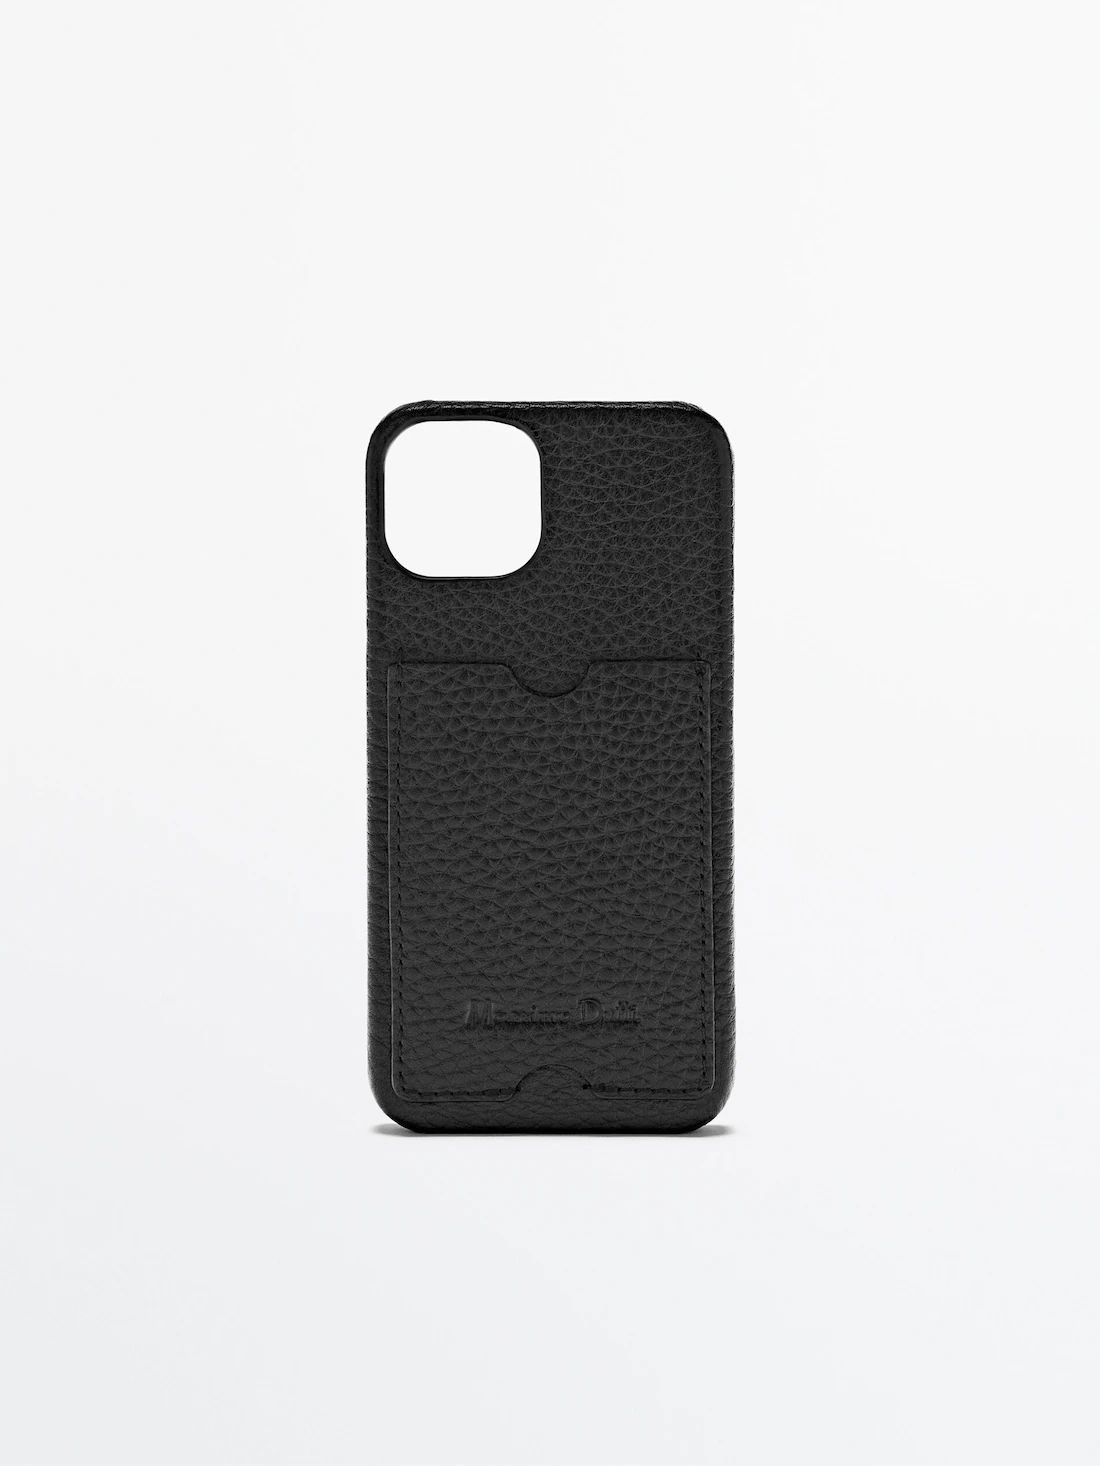 Tumbled leather iPhone 13 case with card slot | Massimo Dutti (US)